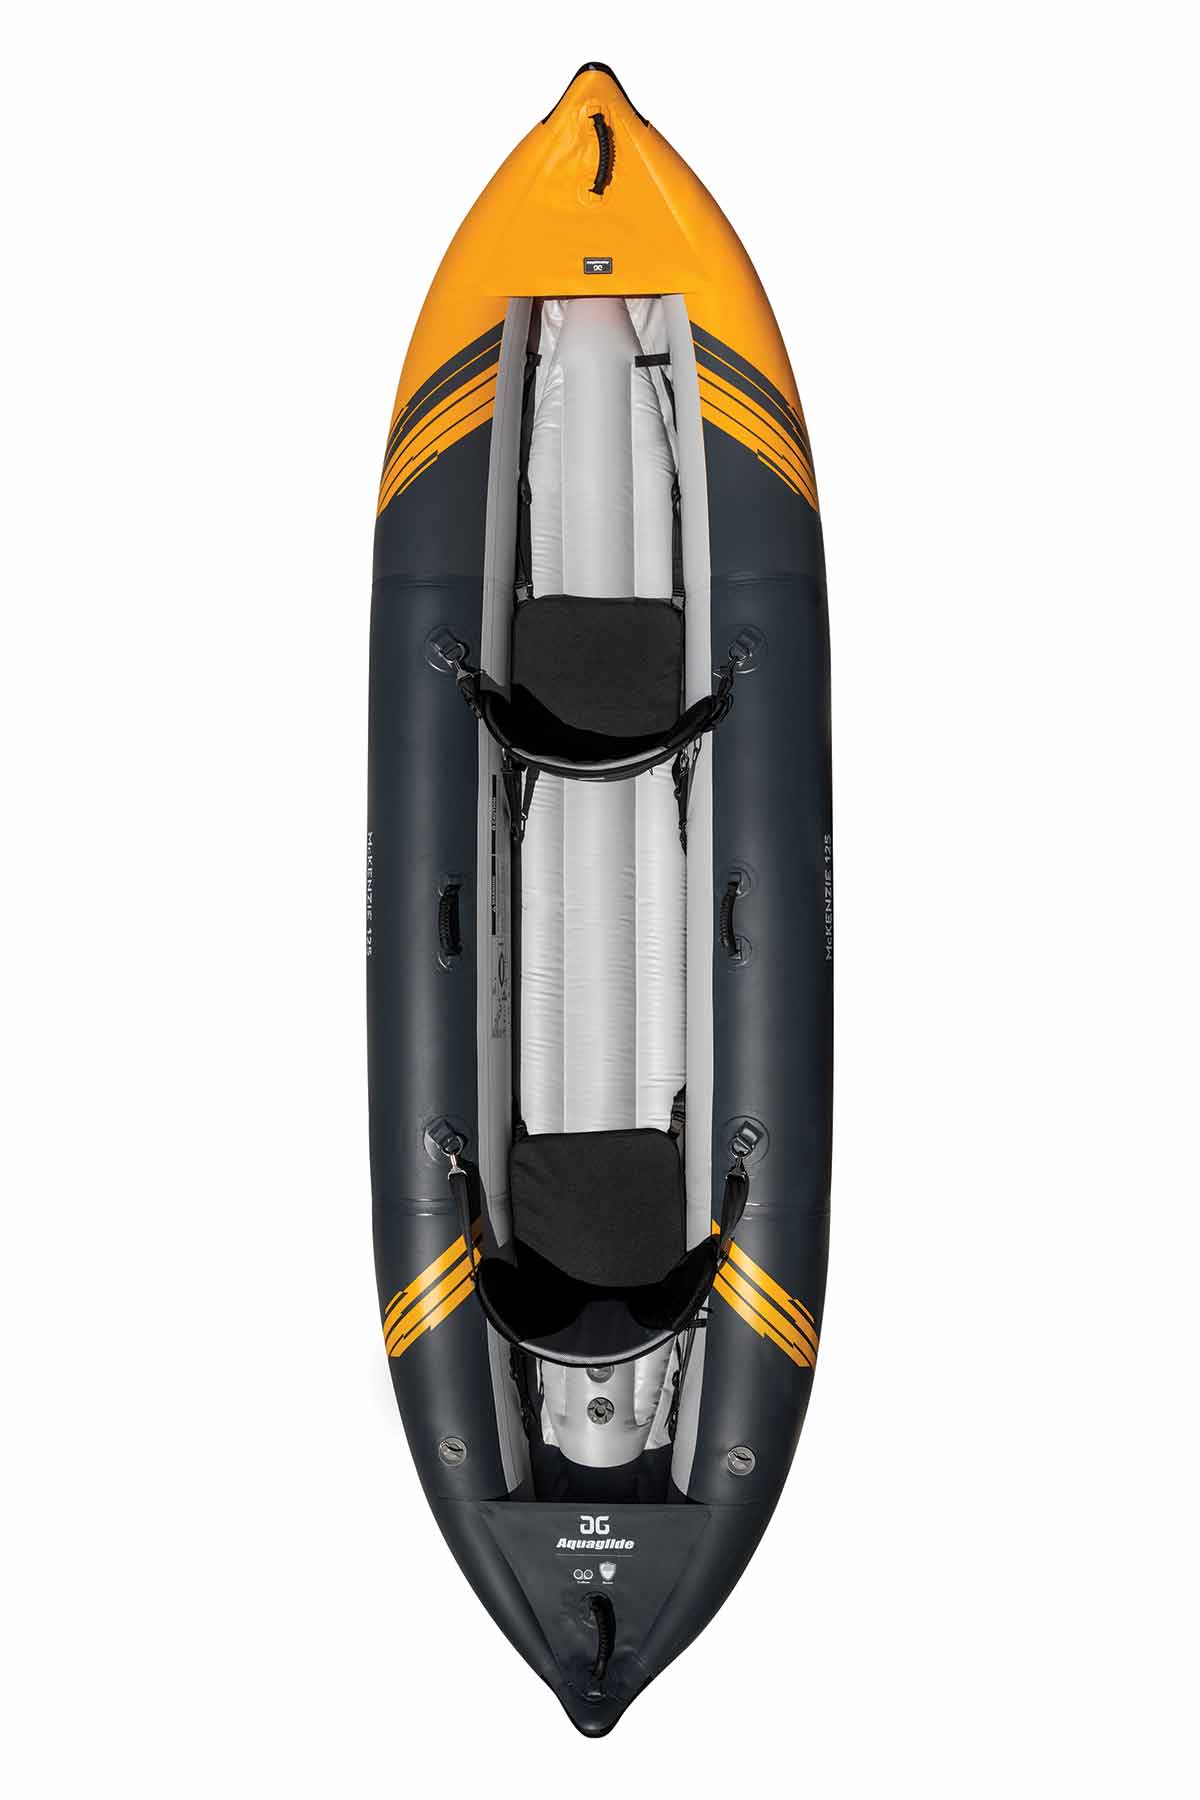 Aquaglide McKenzie 125 Whitewater Inflatable Kayak Top View